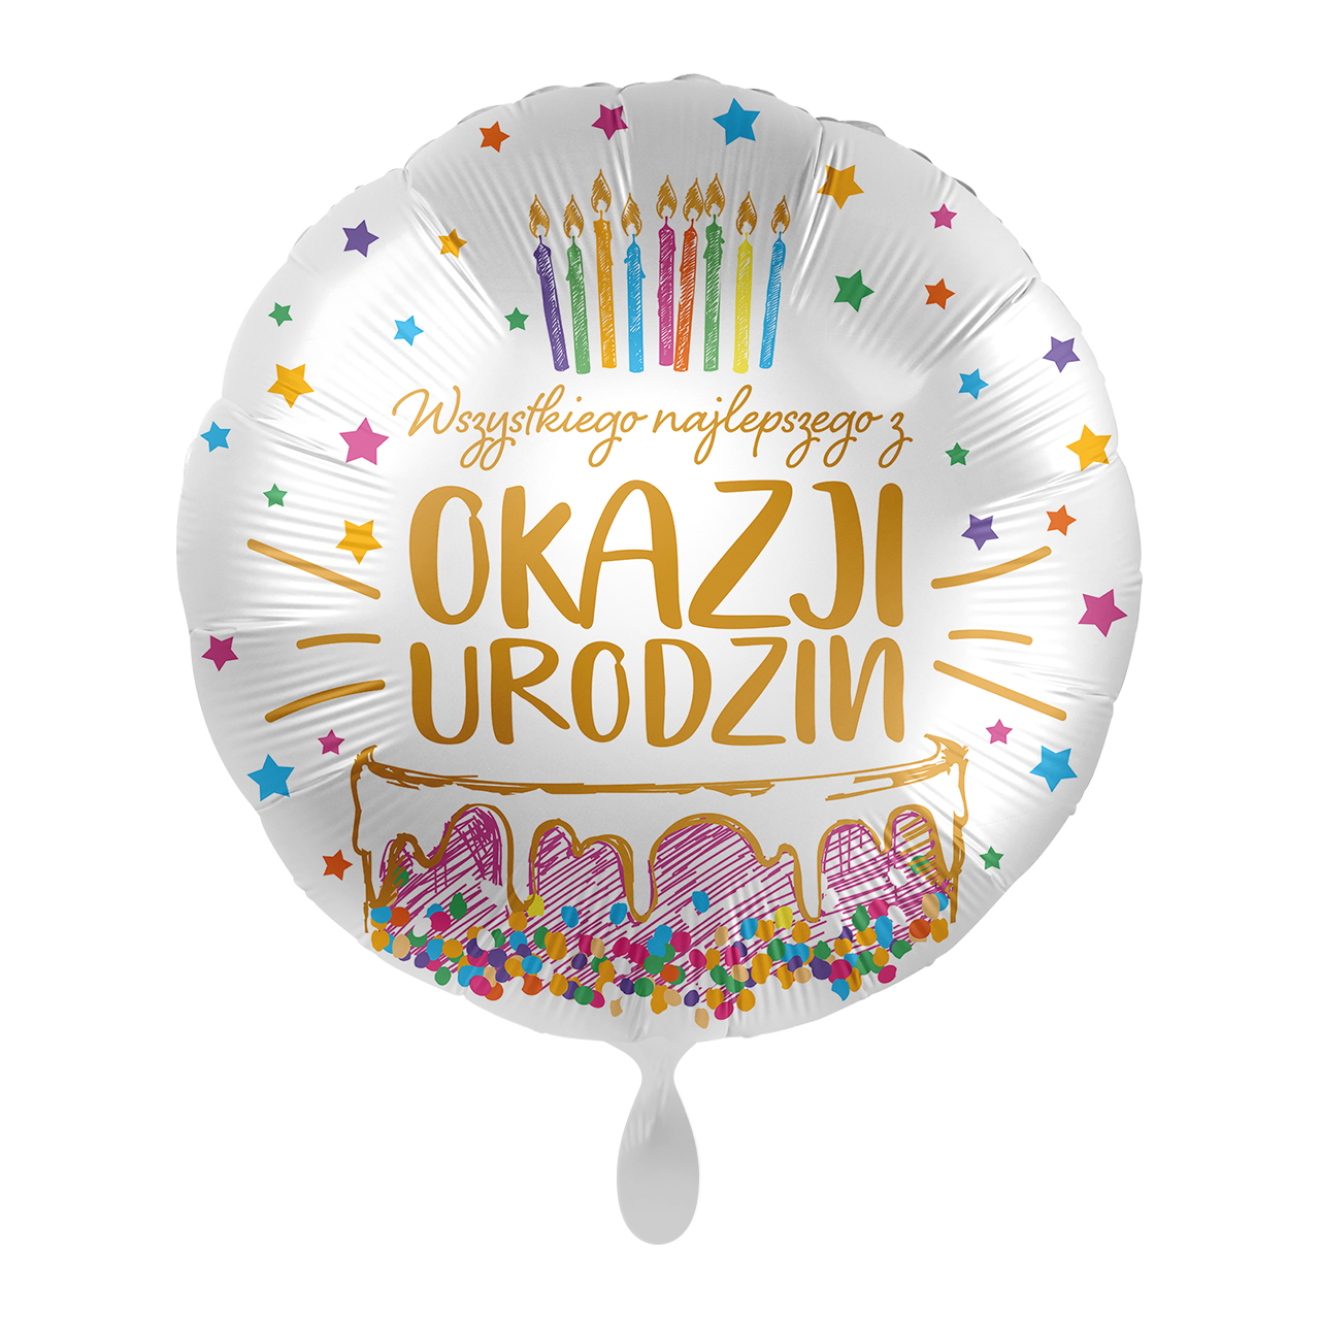 1 Balloon - Birthday Cake - POL